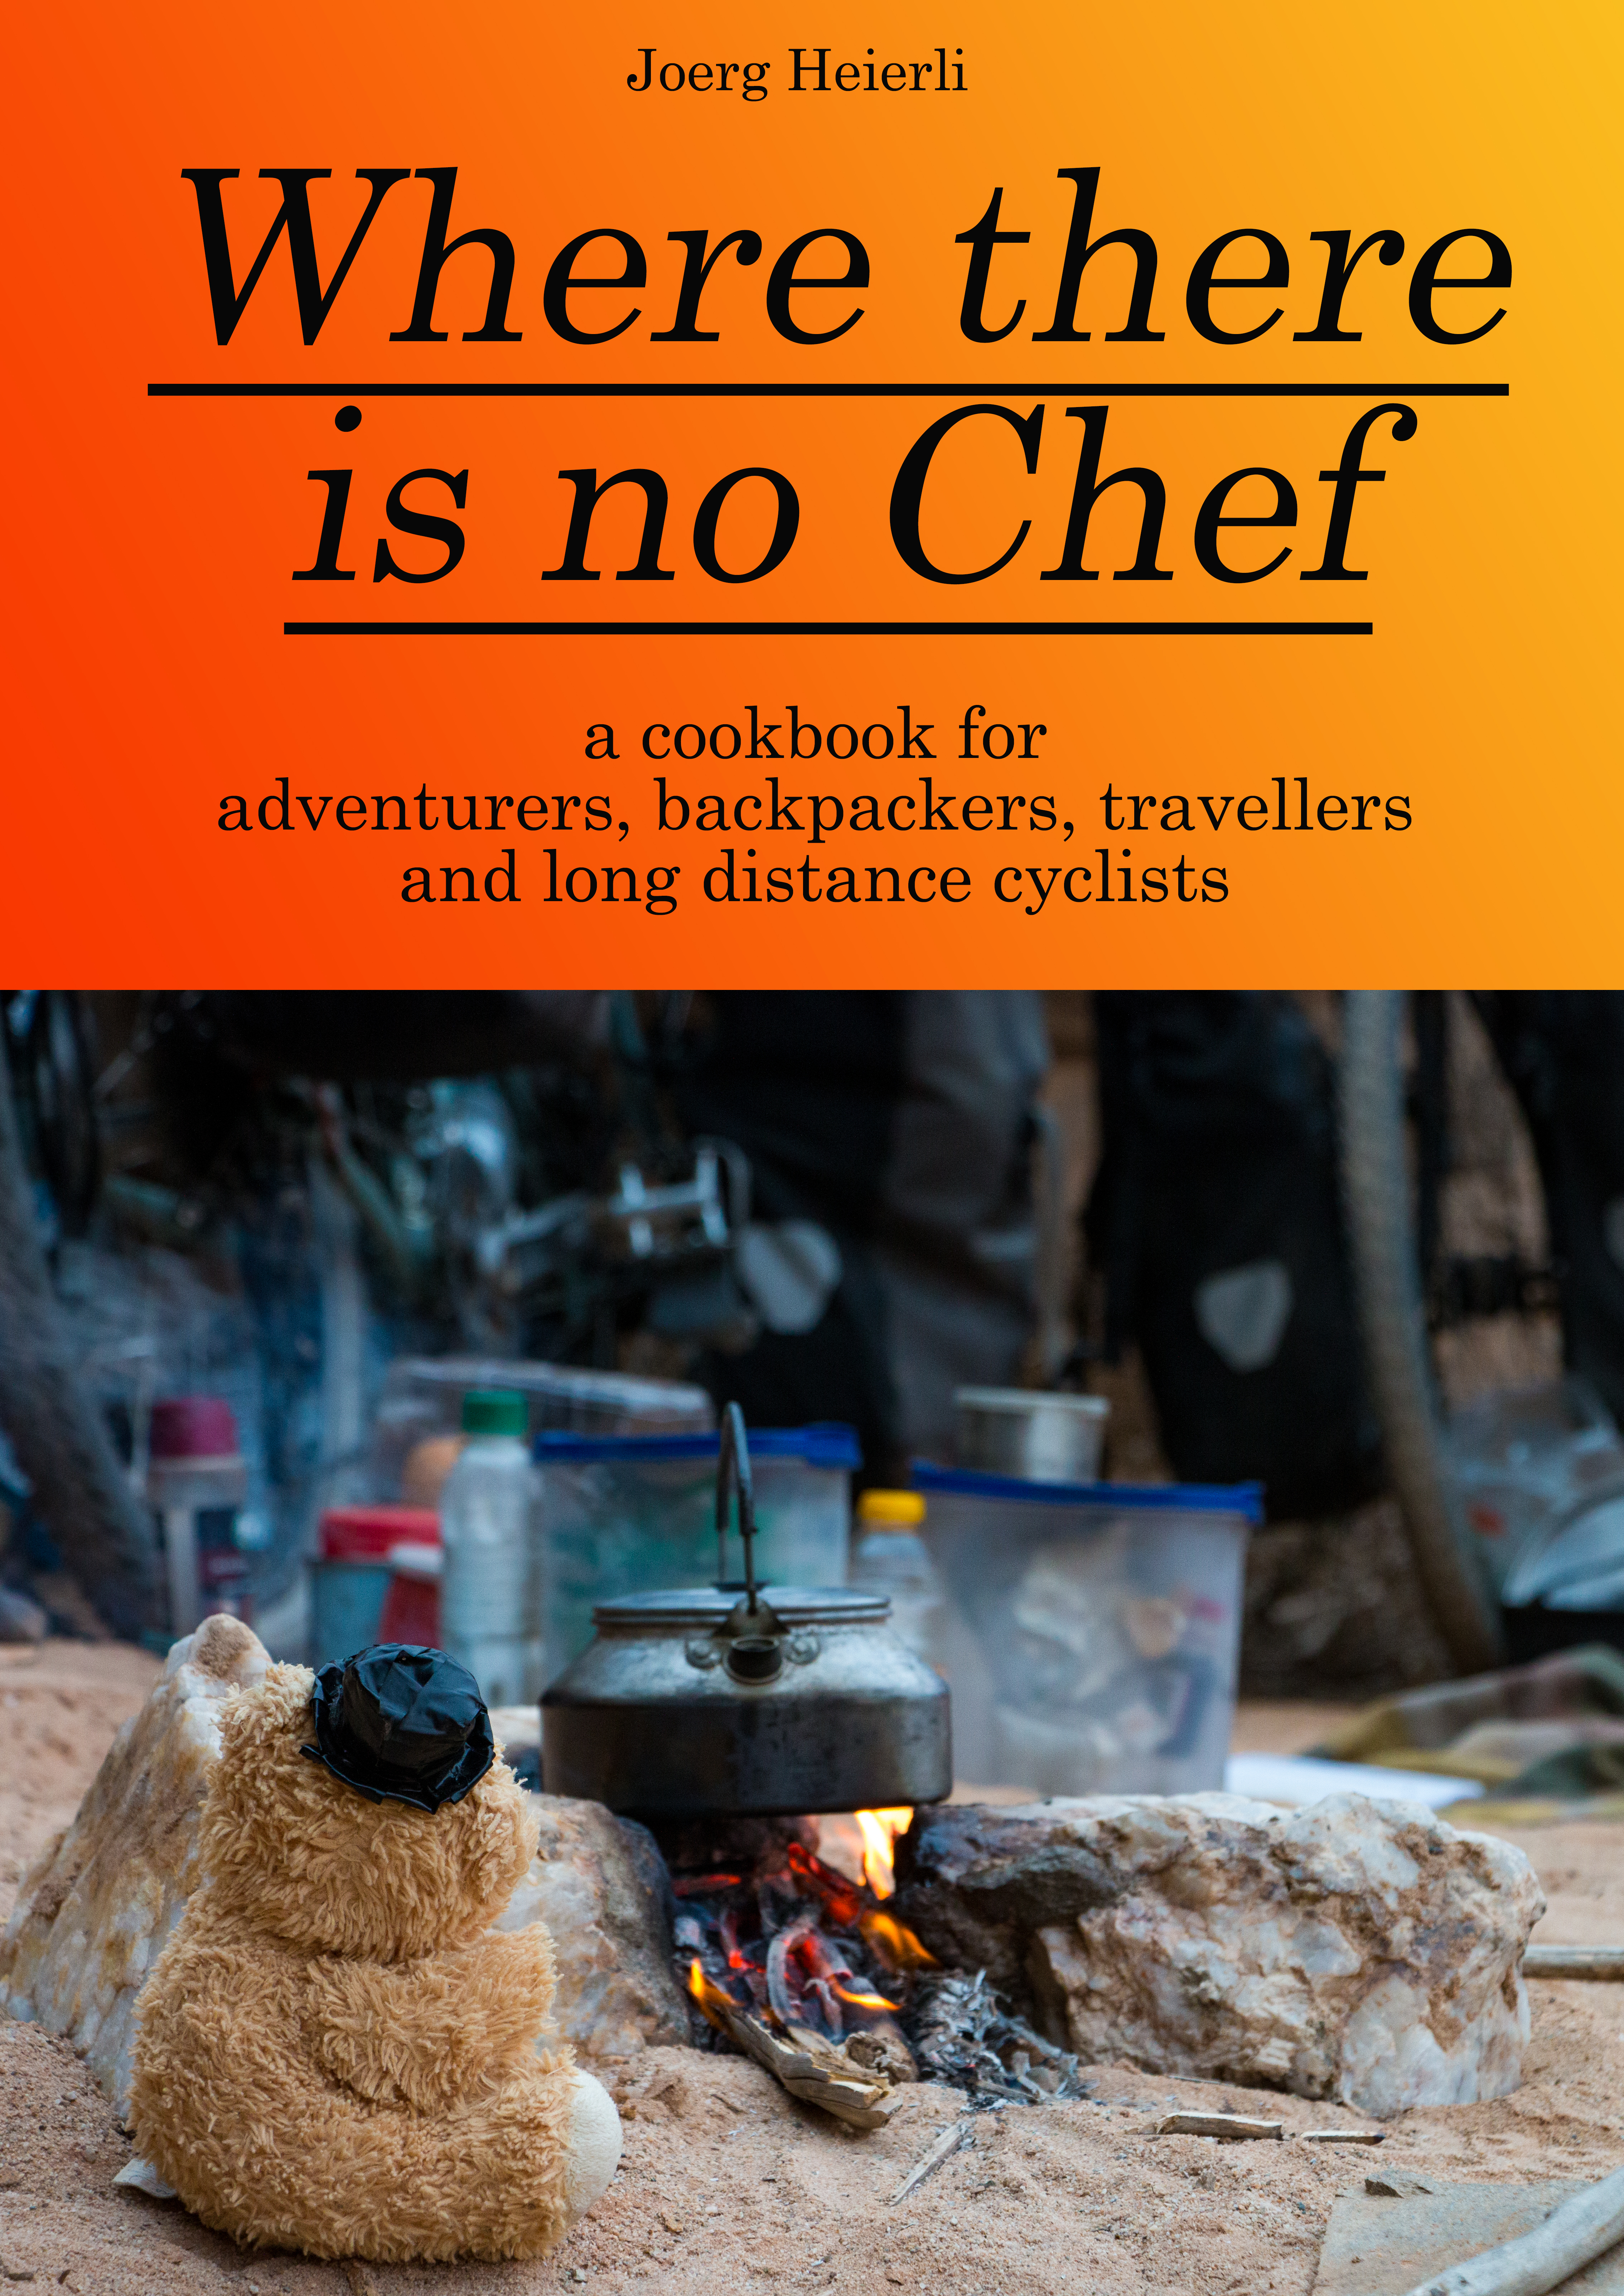 Das Kochbuch "Wo es keinen Koch gibt"